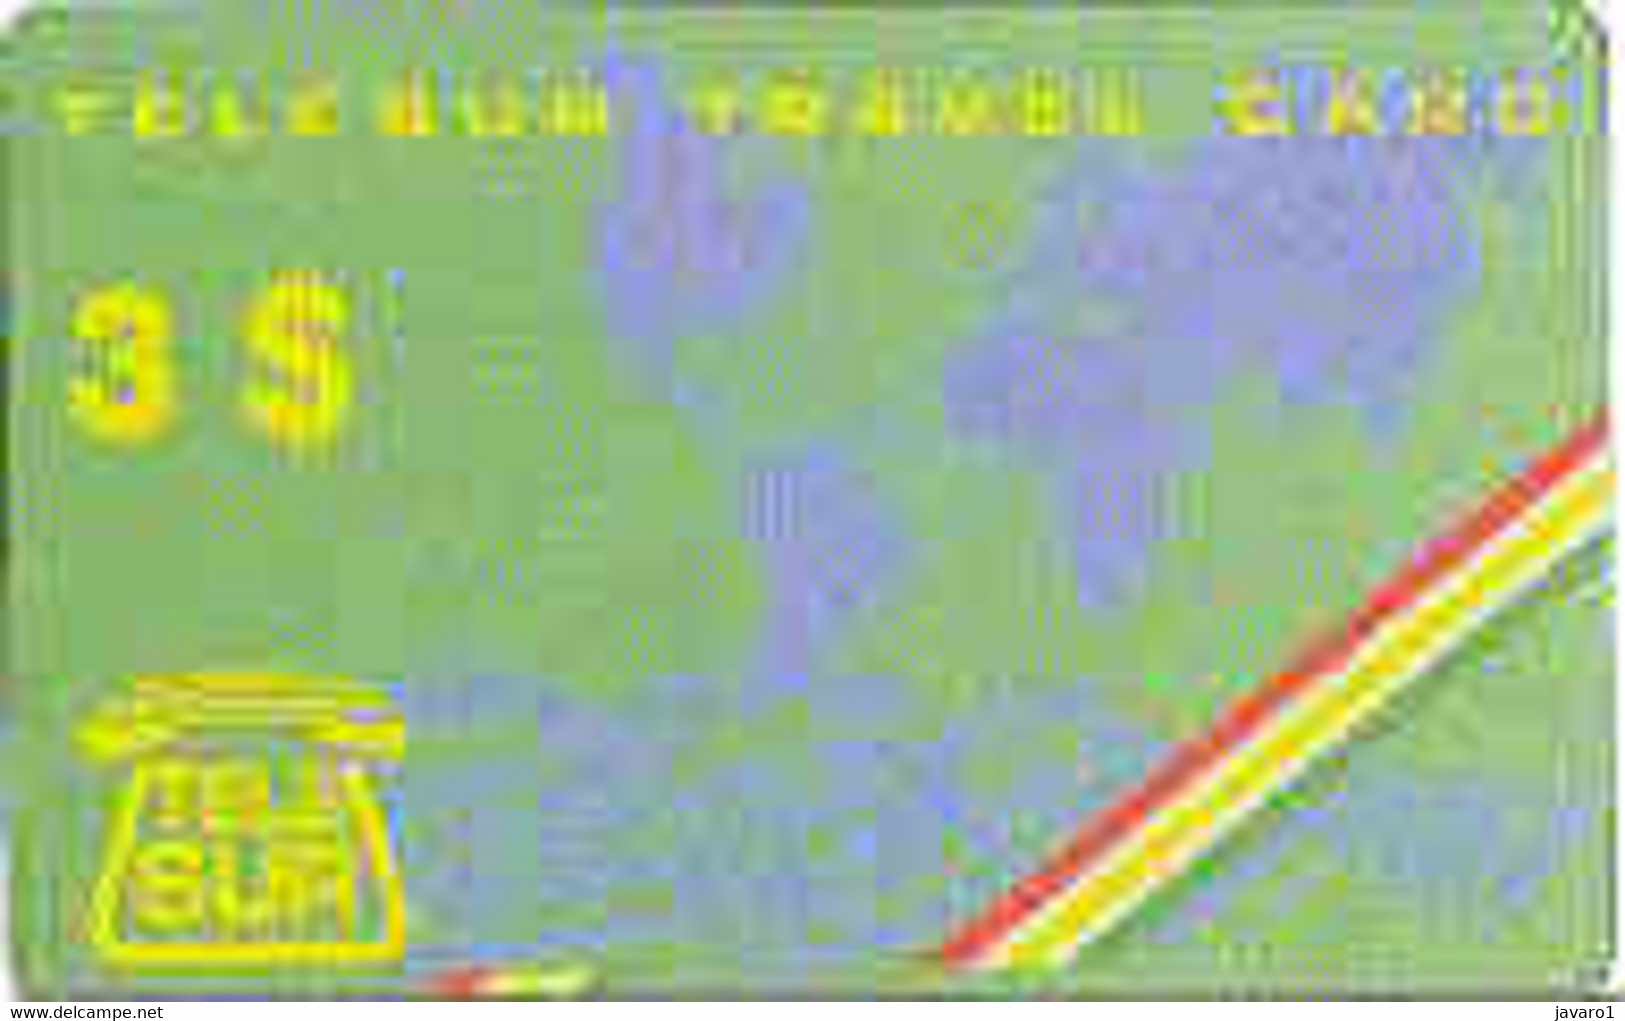 SURINAME : SUR03 3$ Green TELESUR TRAVEL CARD USED - Suriname